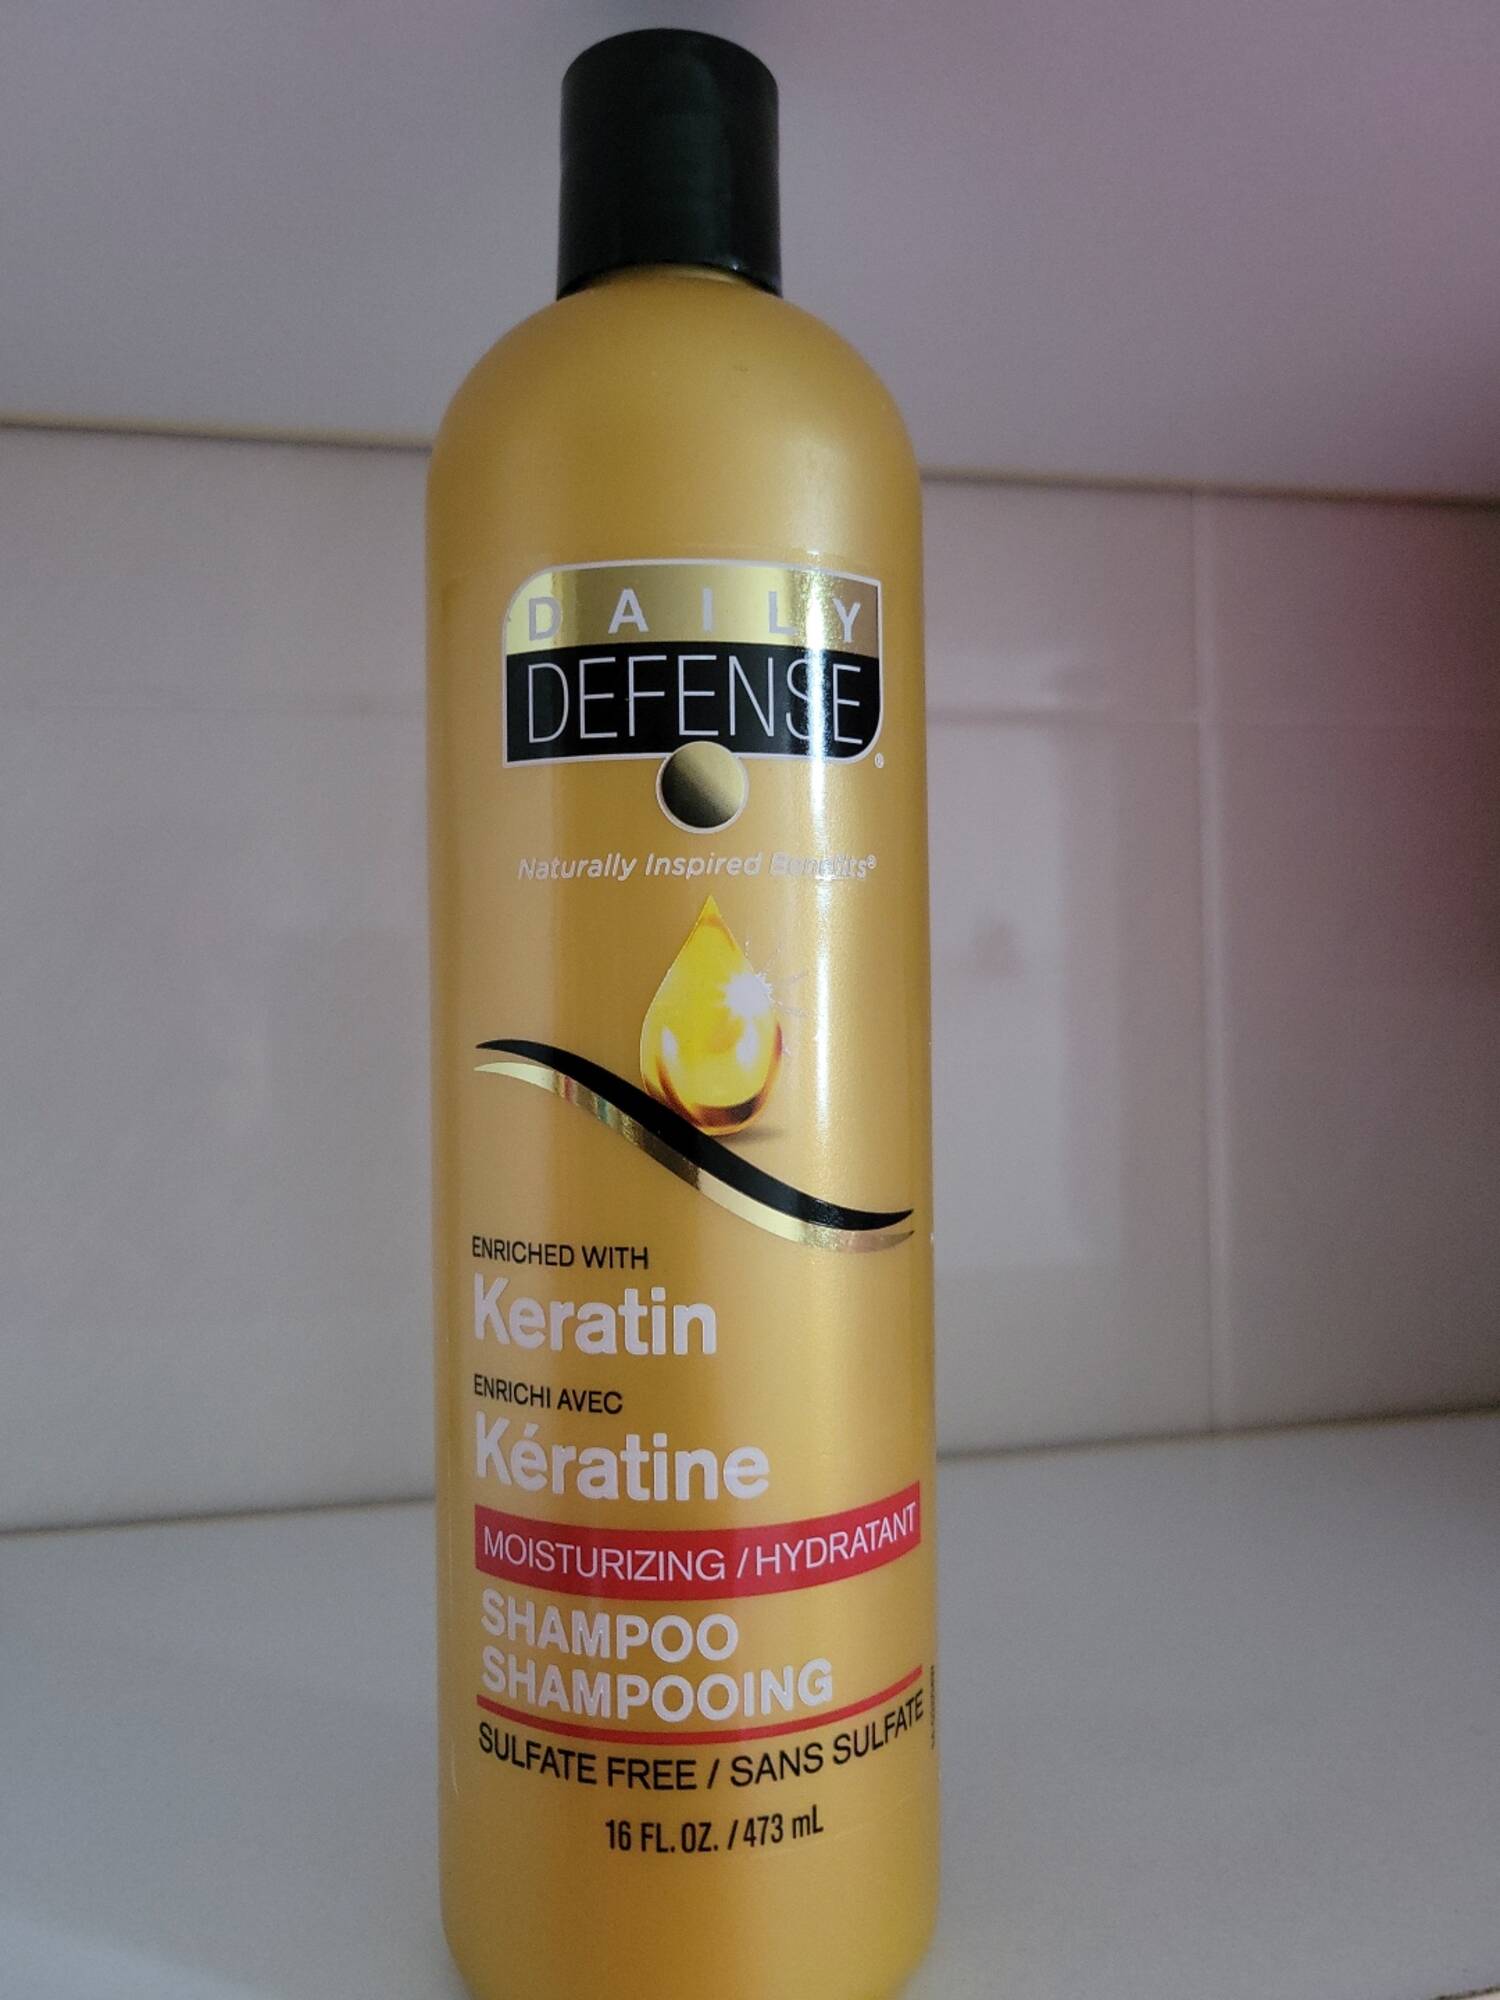 DAILY DEFENSE - Shampooing kératine